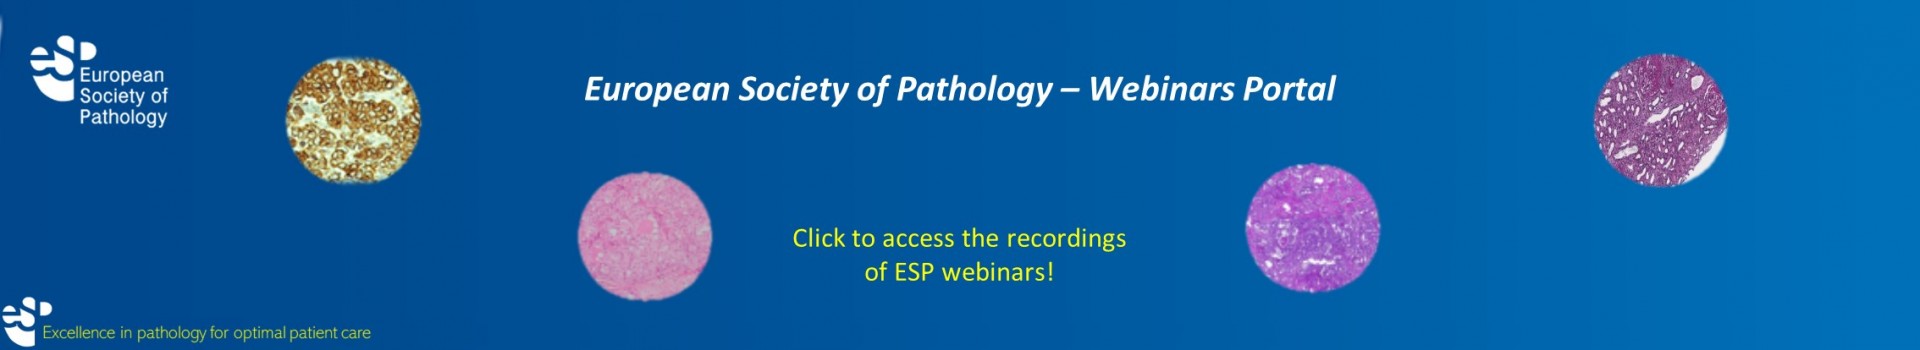 European Society of Pathology - Webinar Portal